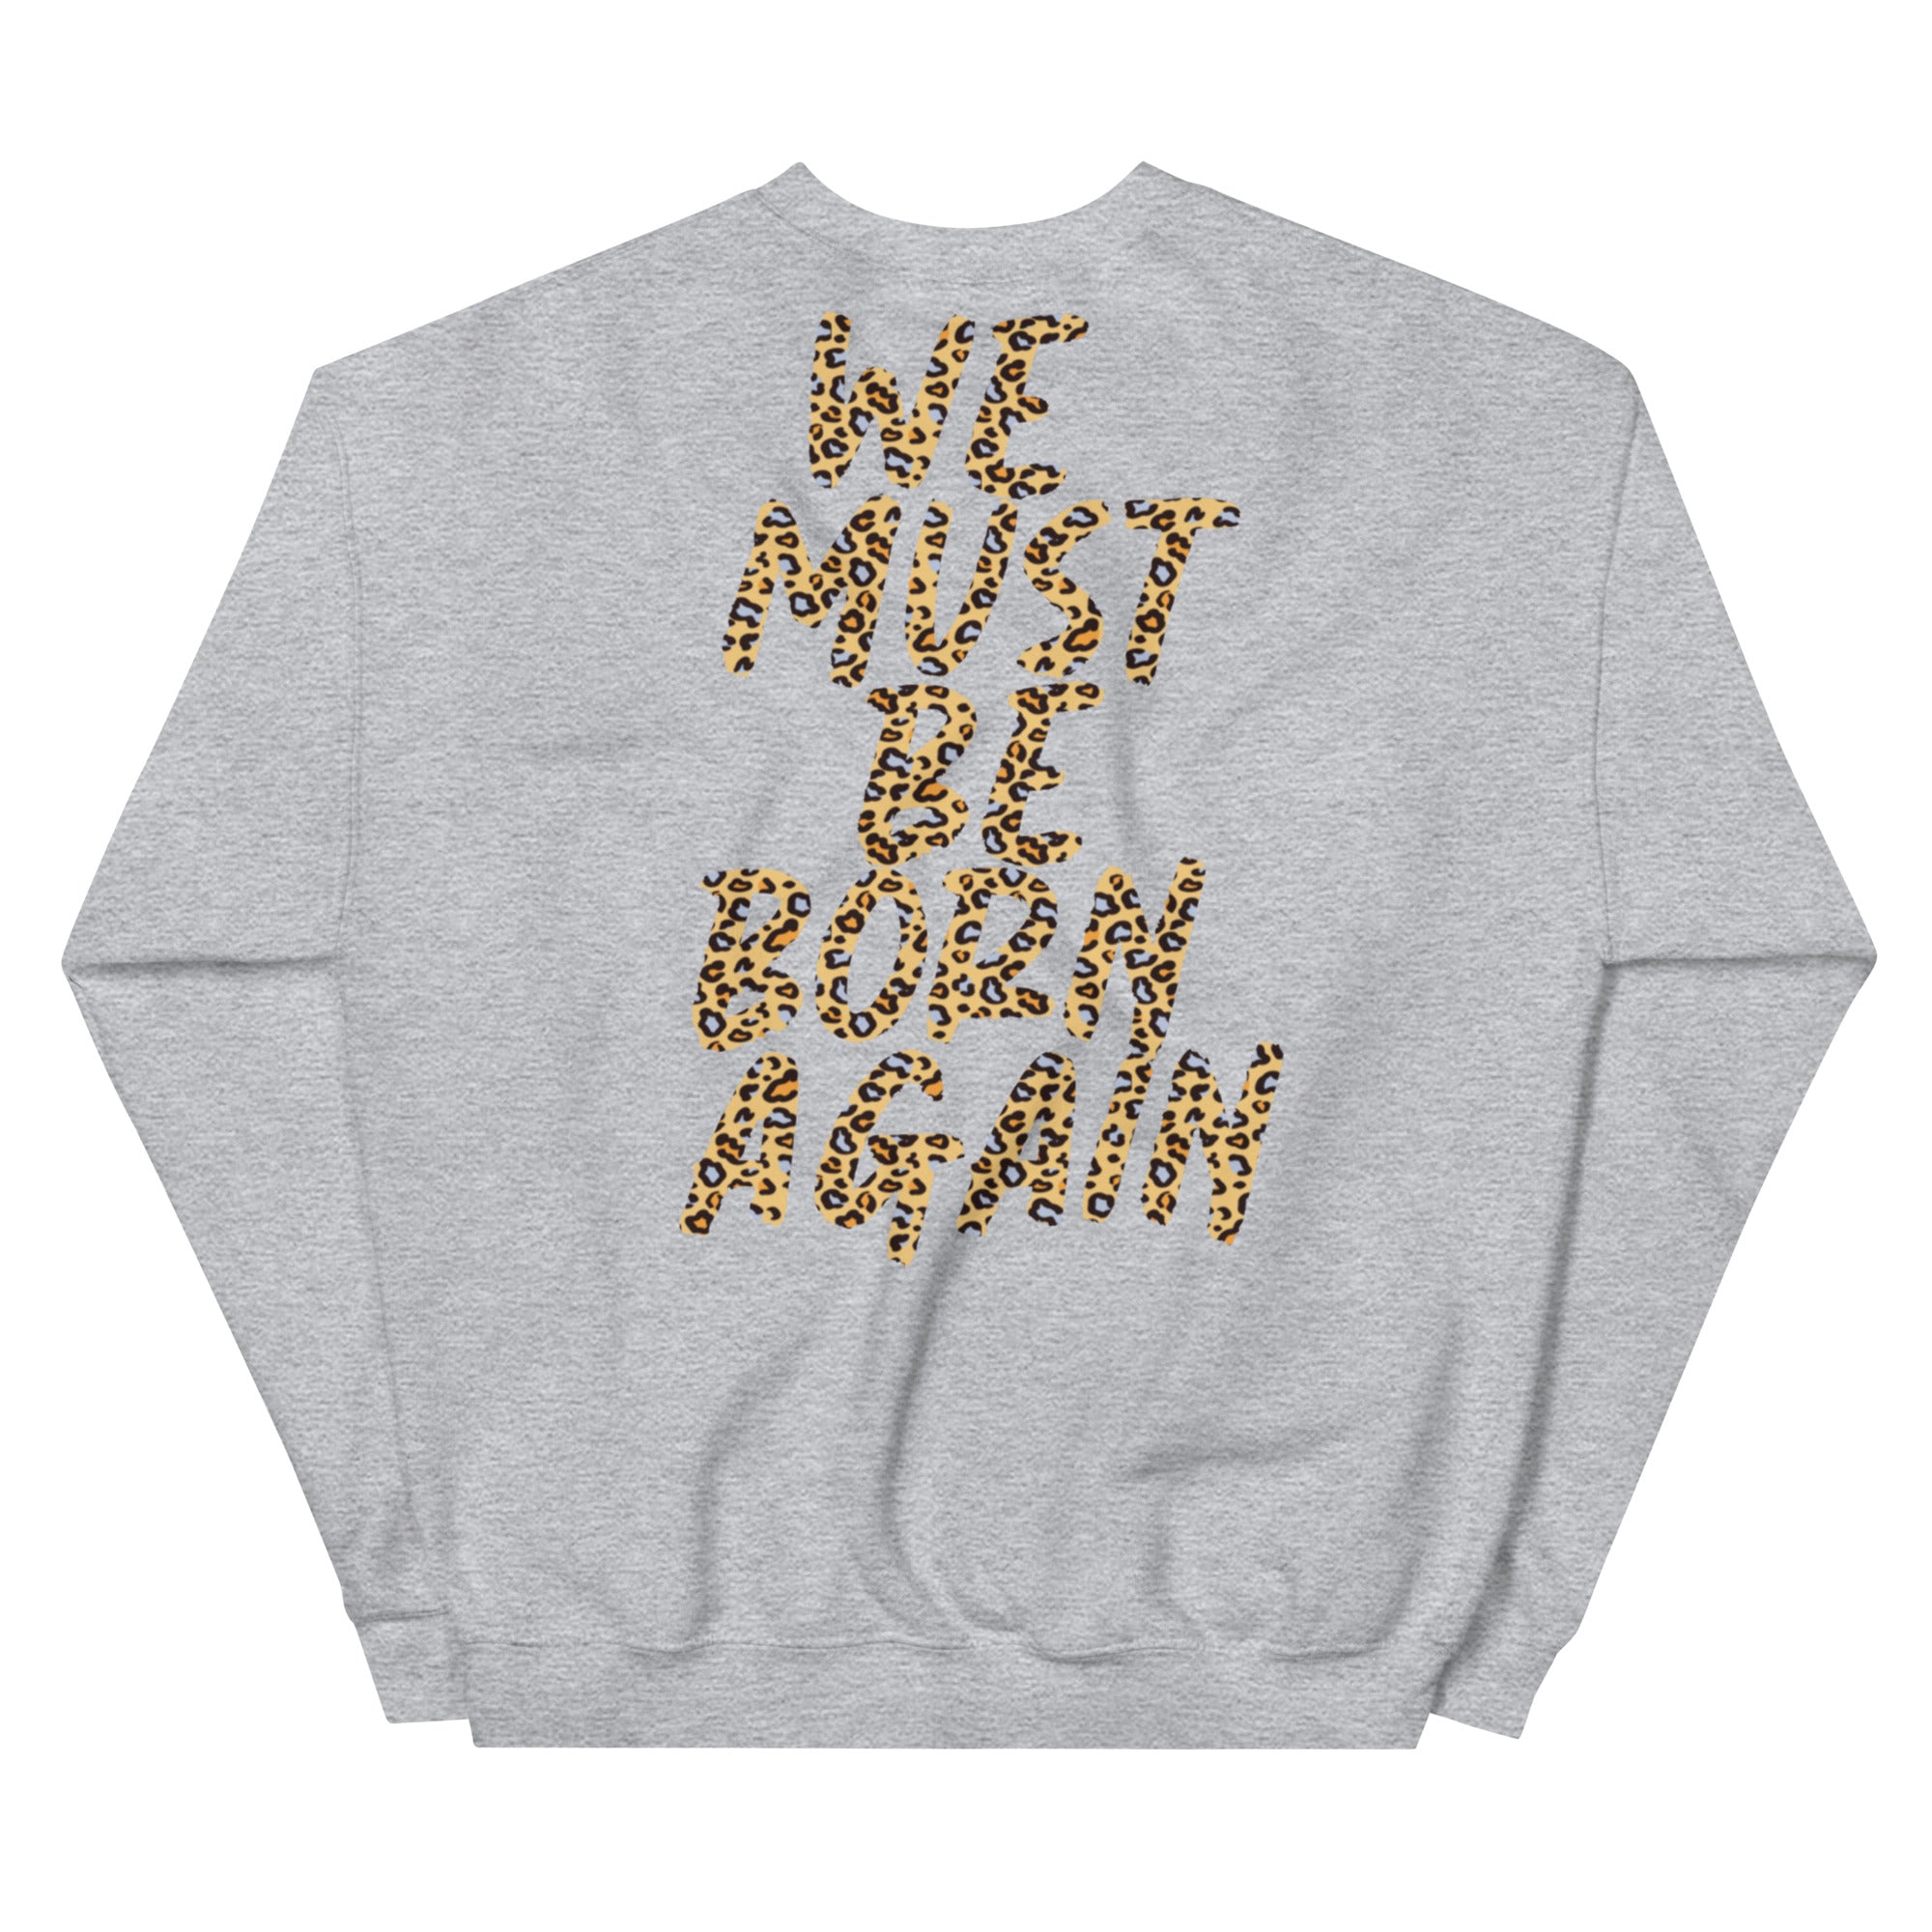 Preach We Must Be Born Again Unisex Premium Sweatshirt